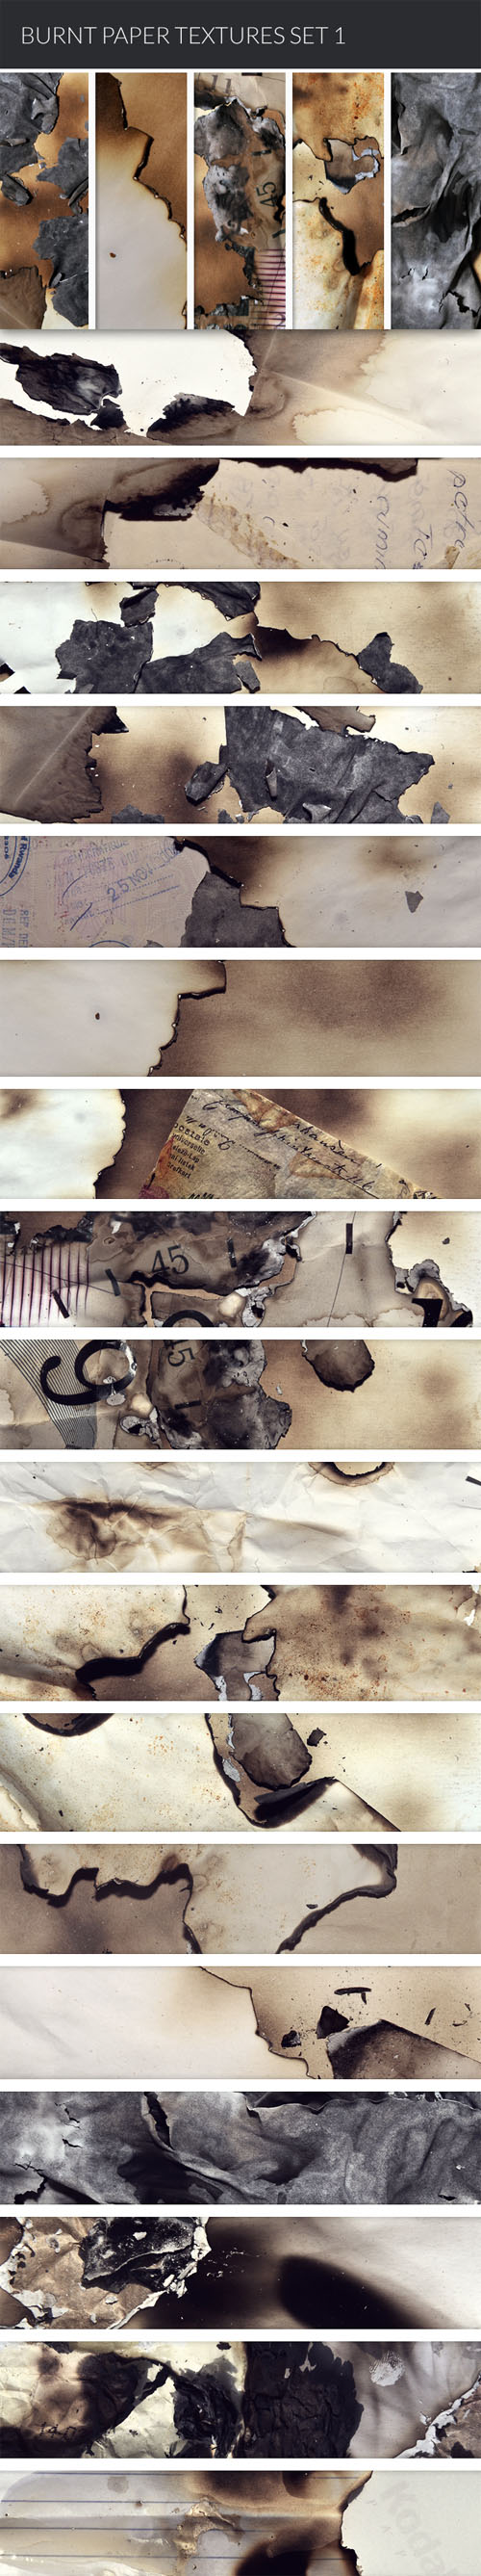 Designtnt - Burnt Paper Textures